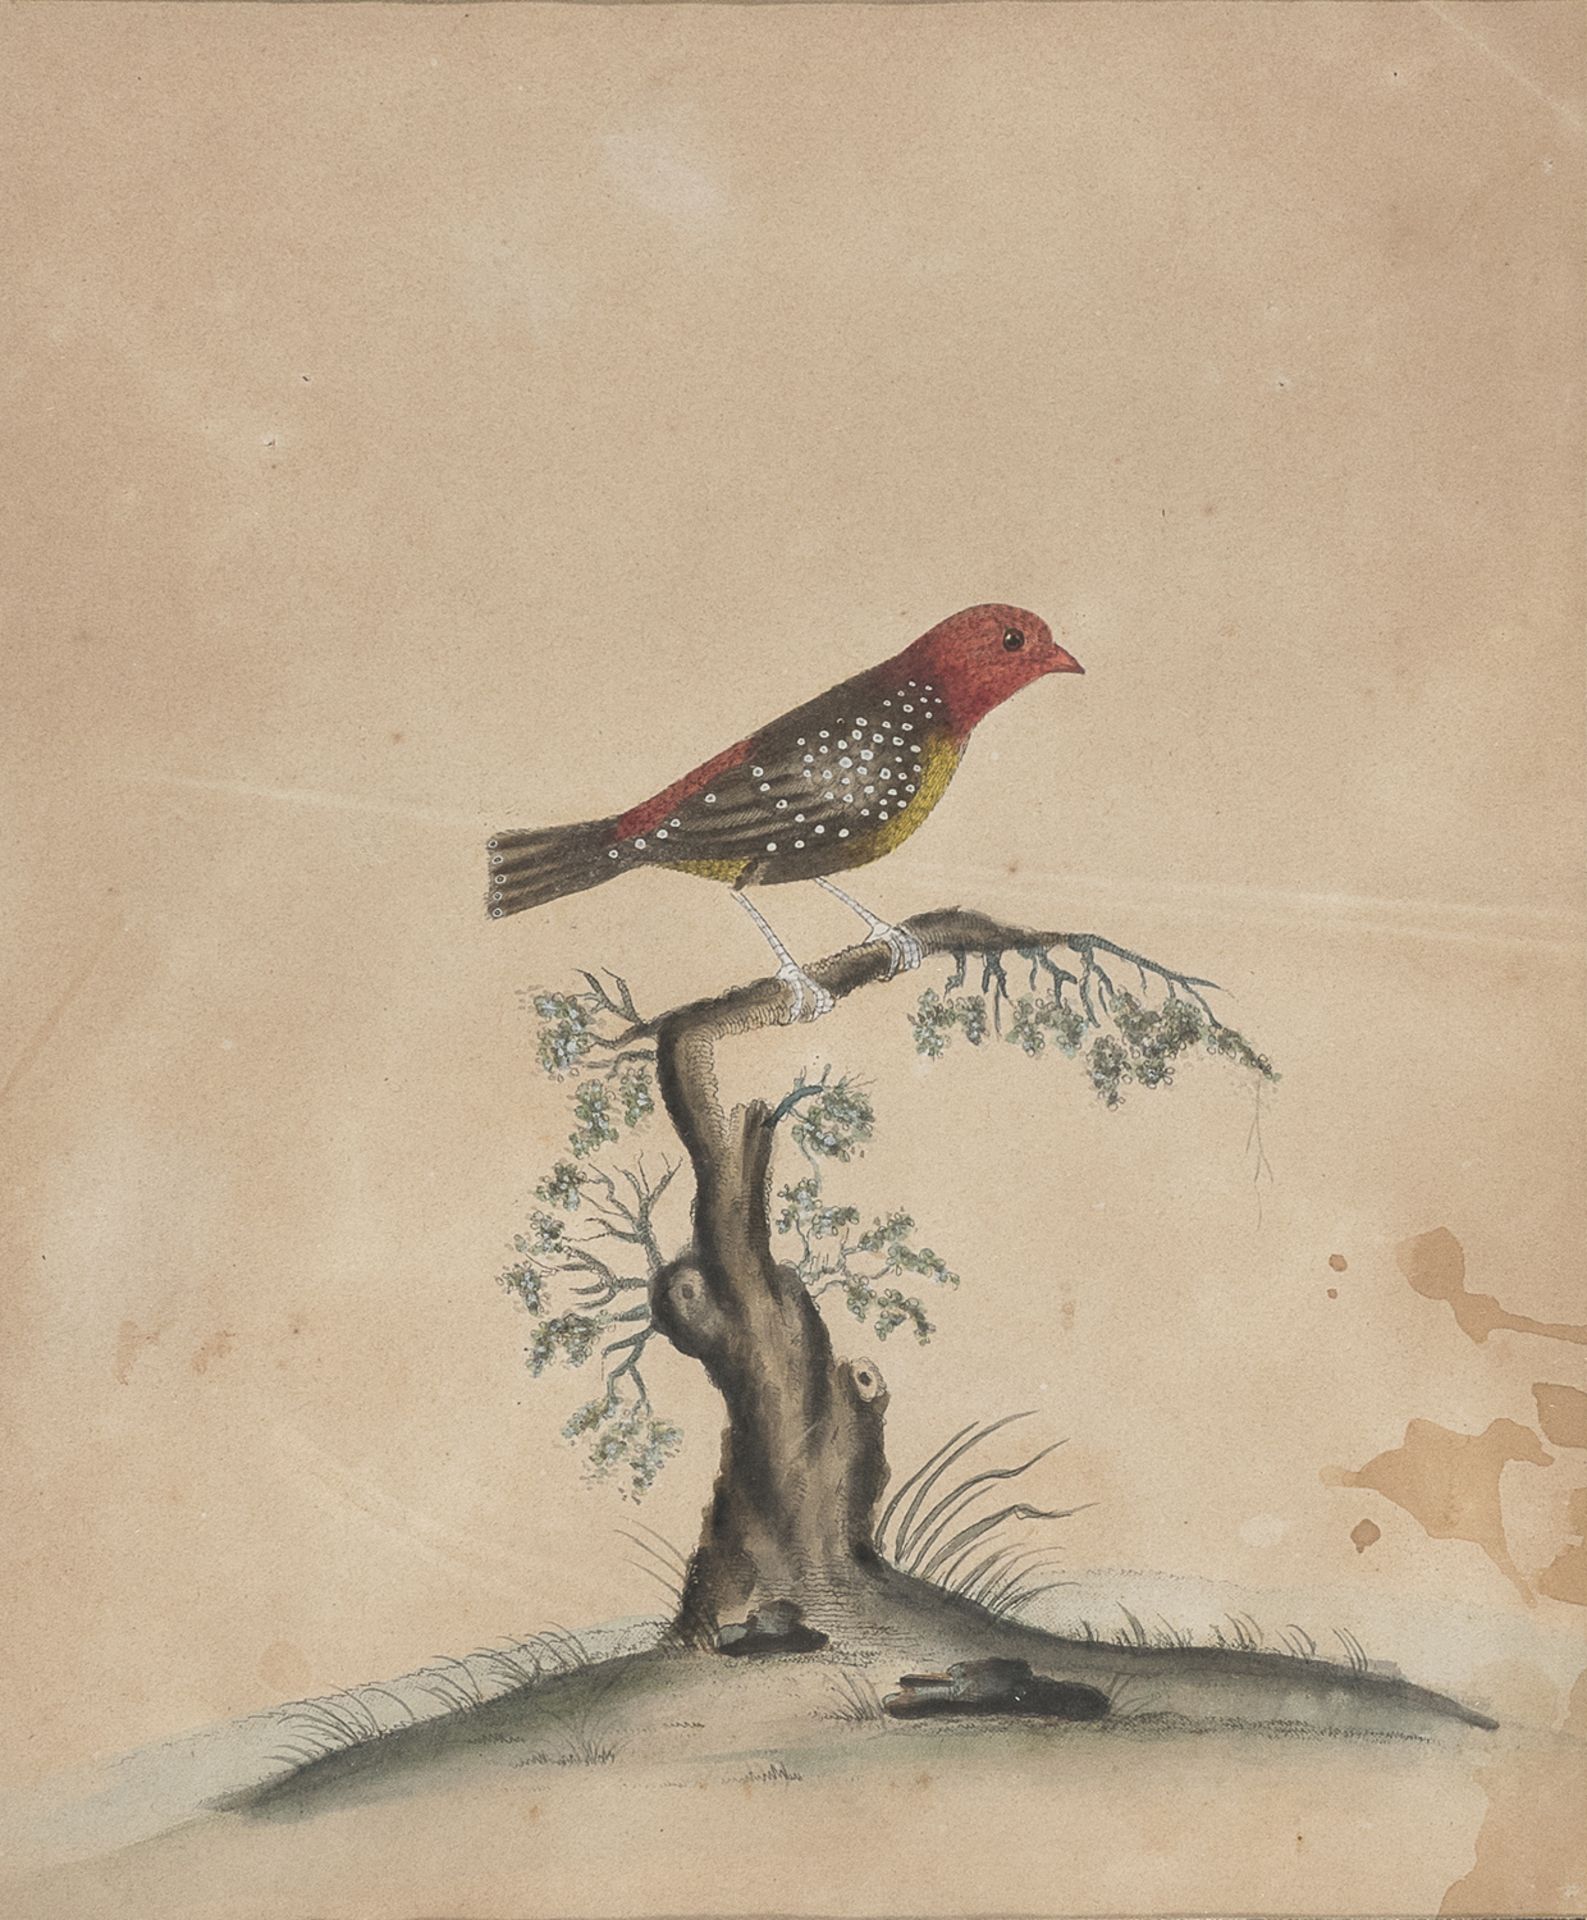 SIX ENGLISH WATERCOLOR OF BIRDS 19TH CENTURY